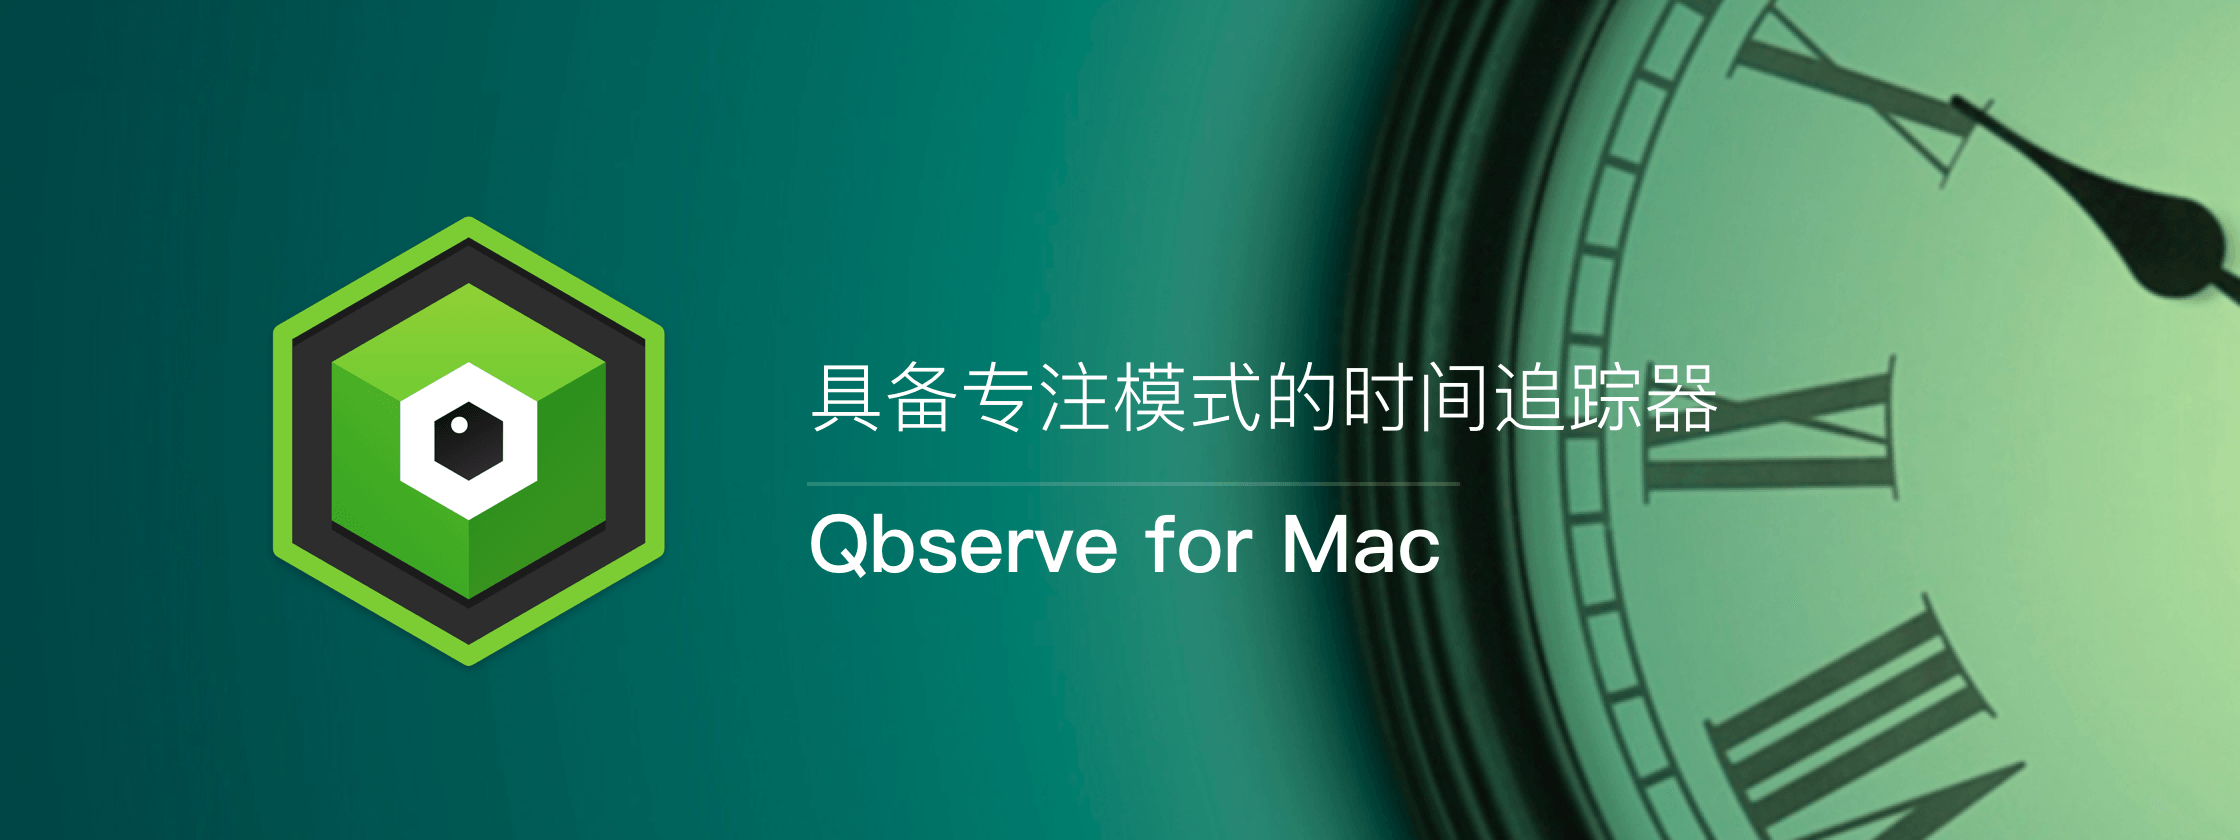 Qbserve for Mac – 具备专注模式的时间追踪器